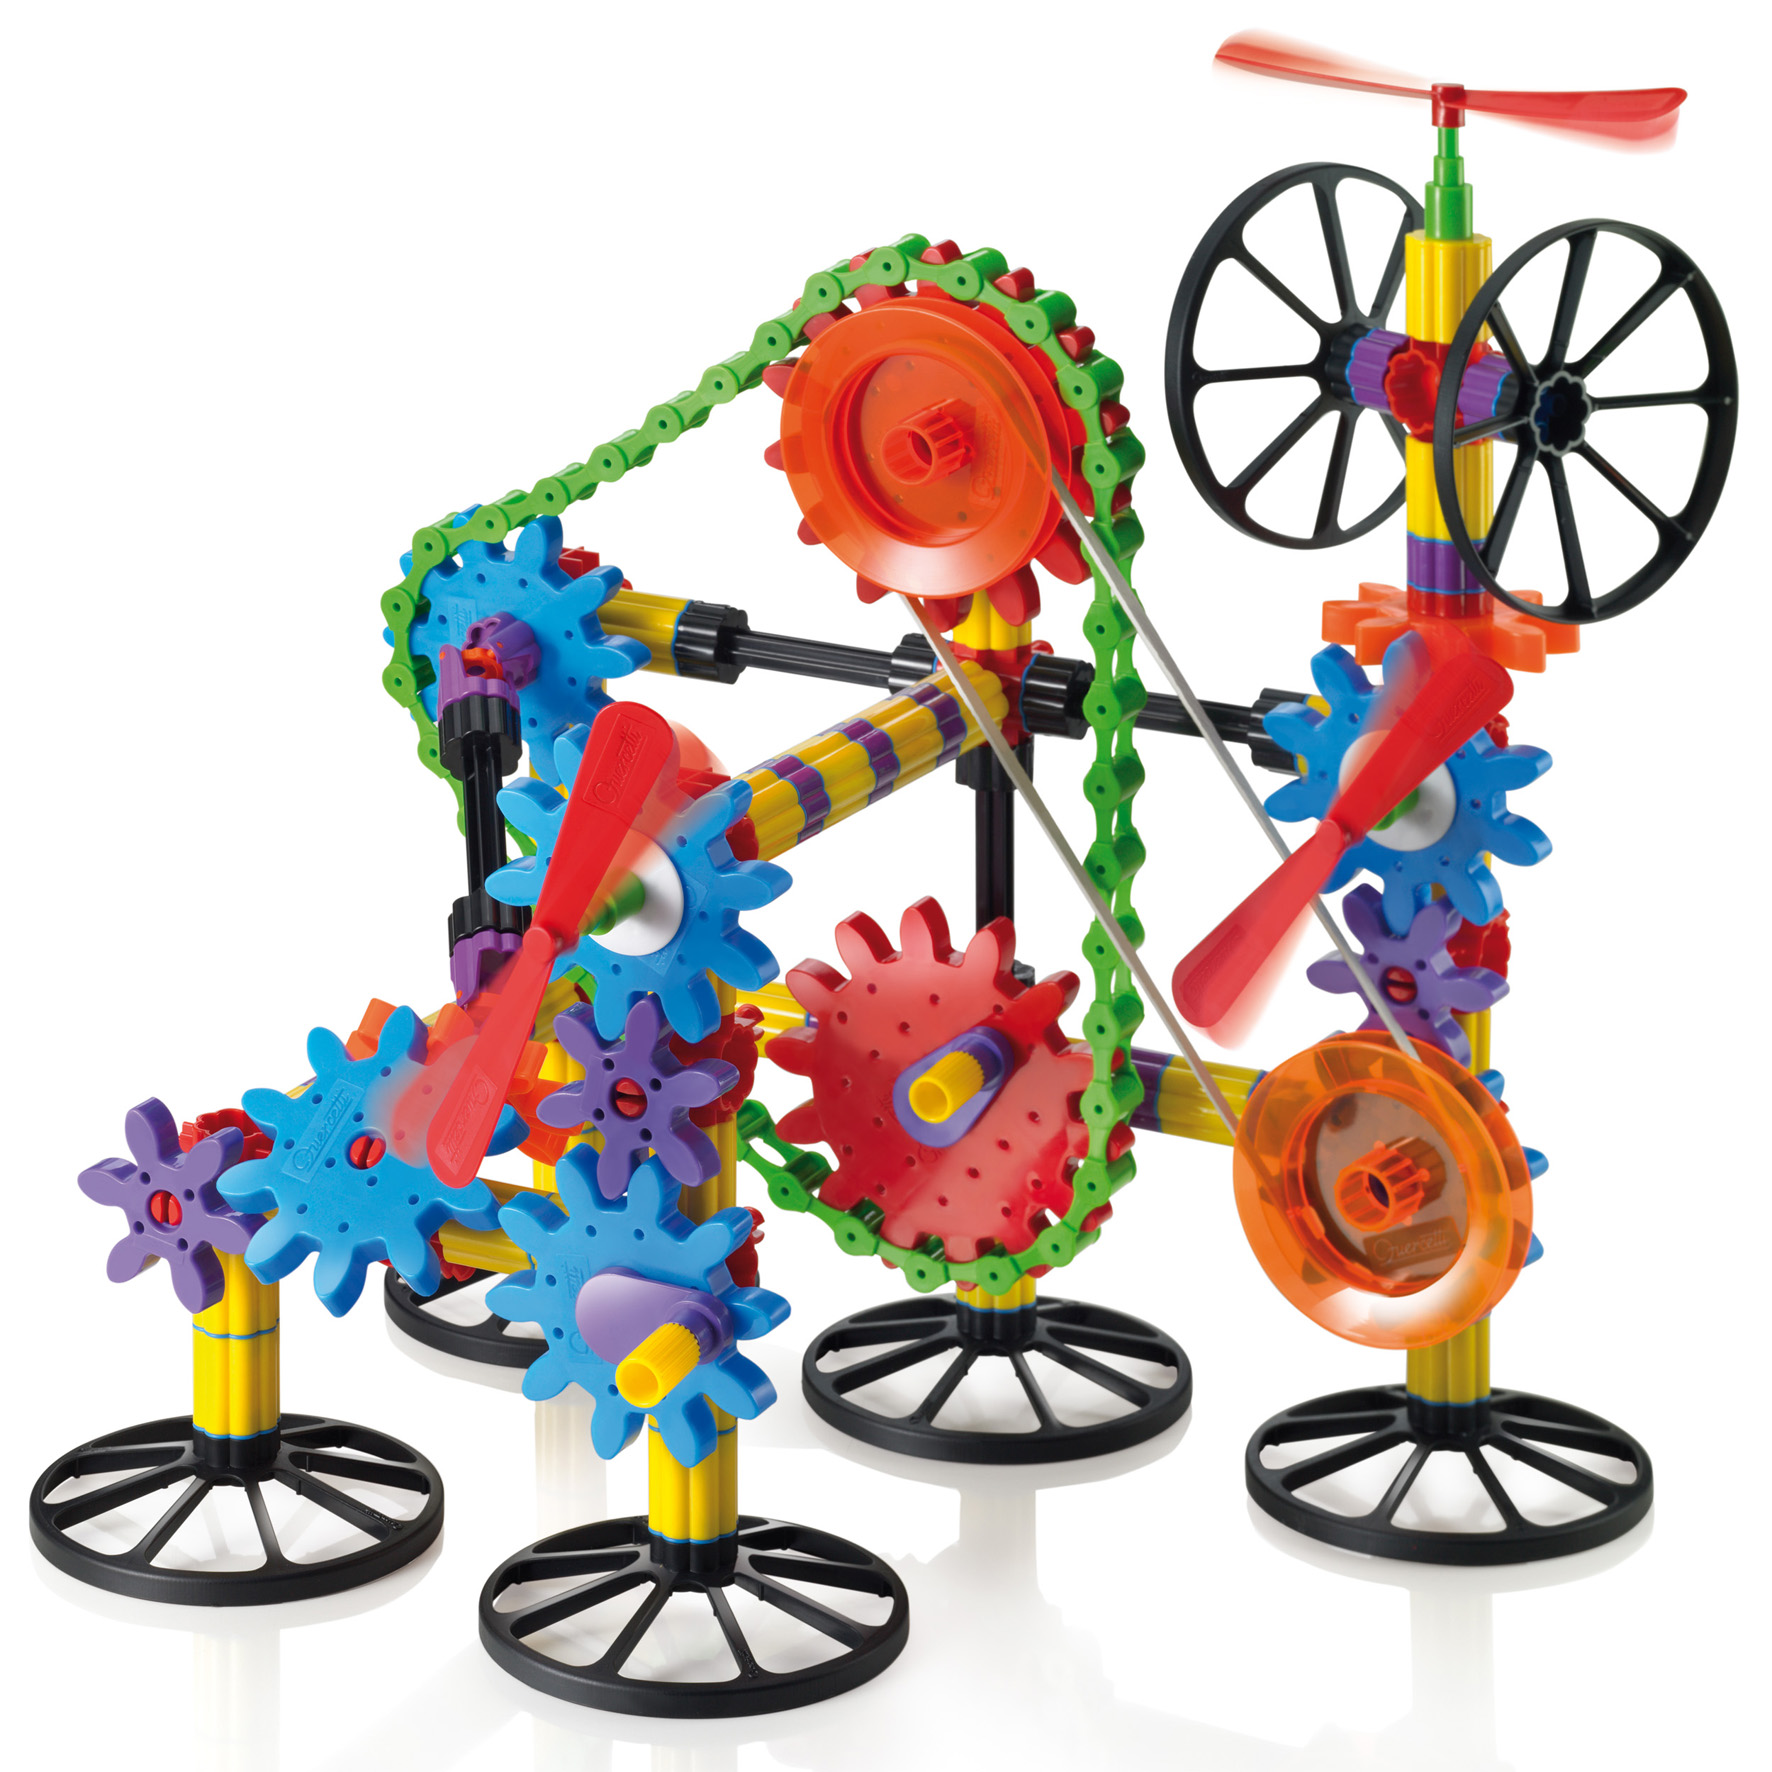 Construction toys quercetti georello gears tech